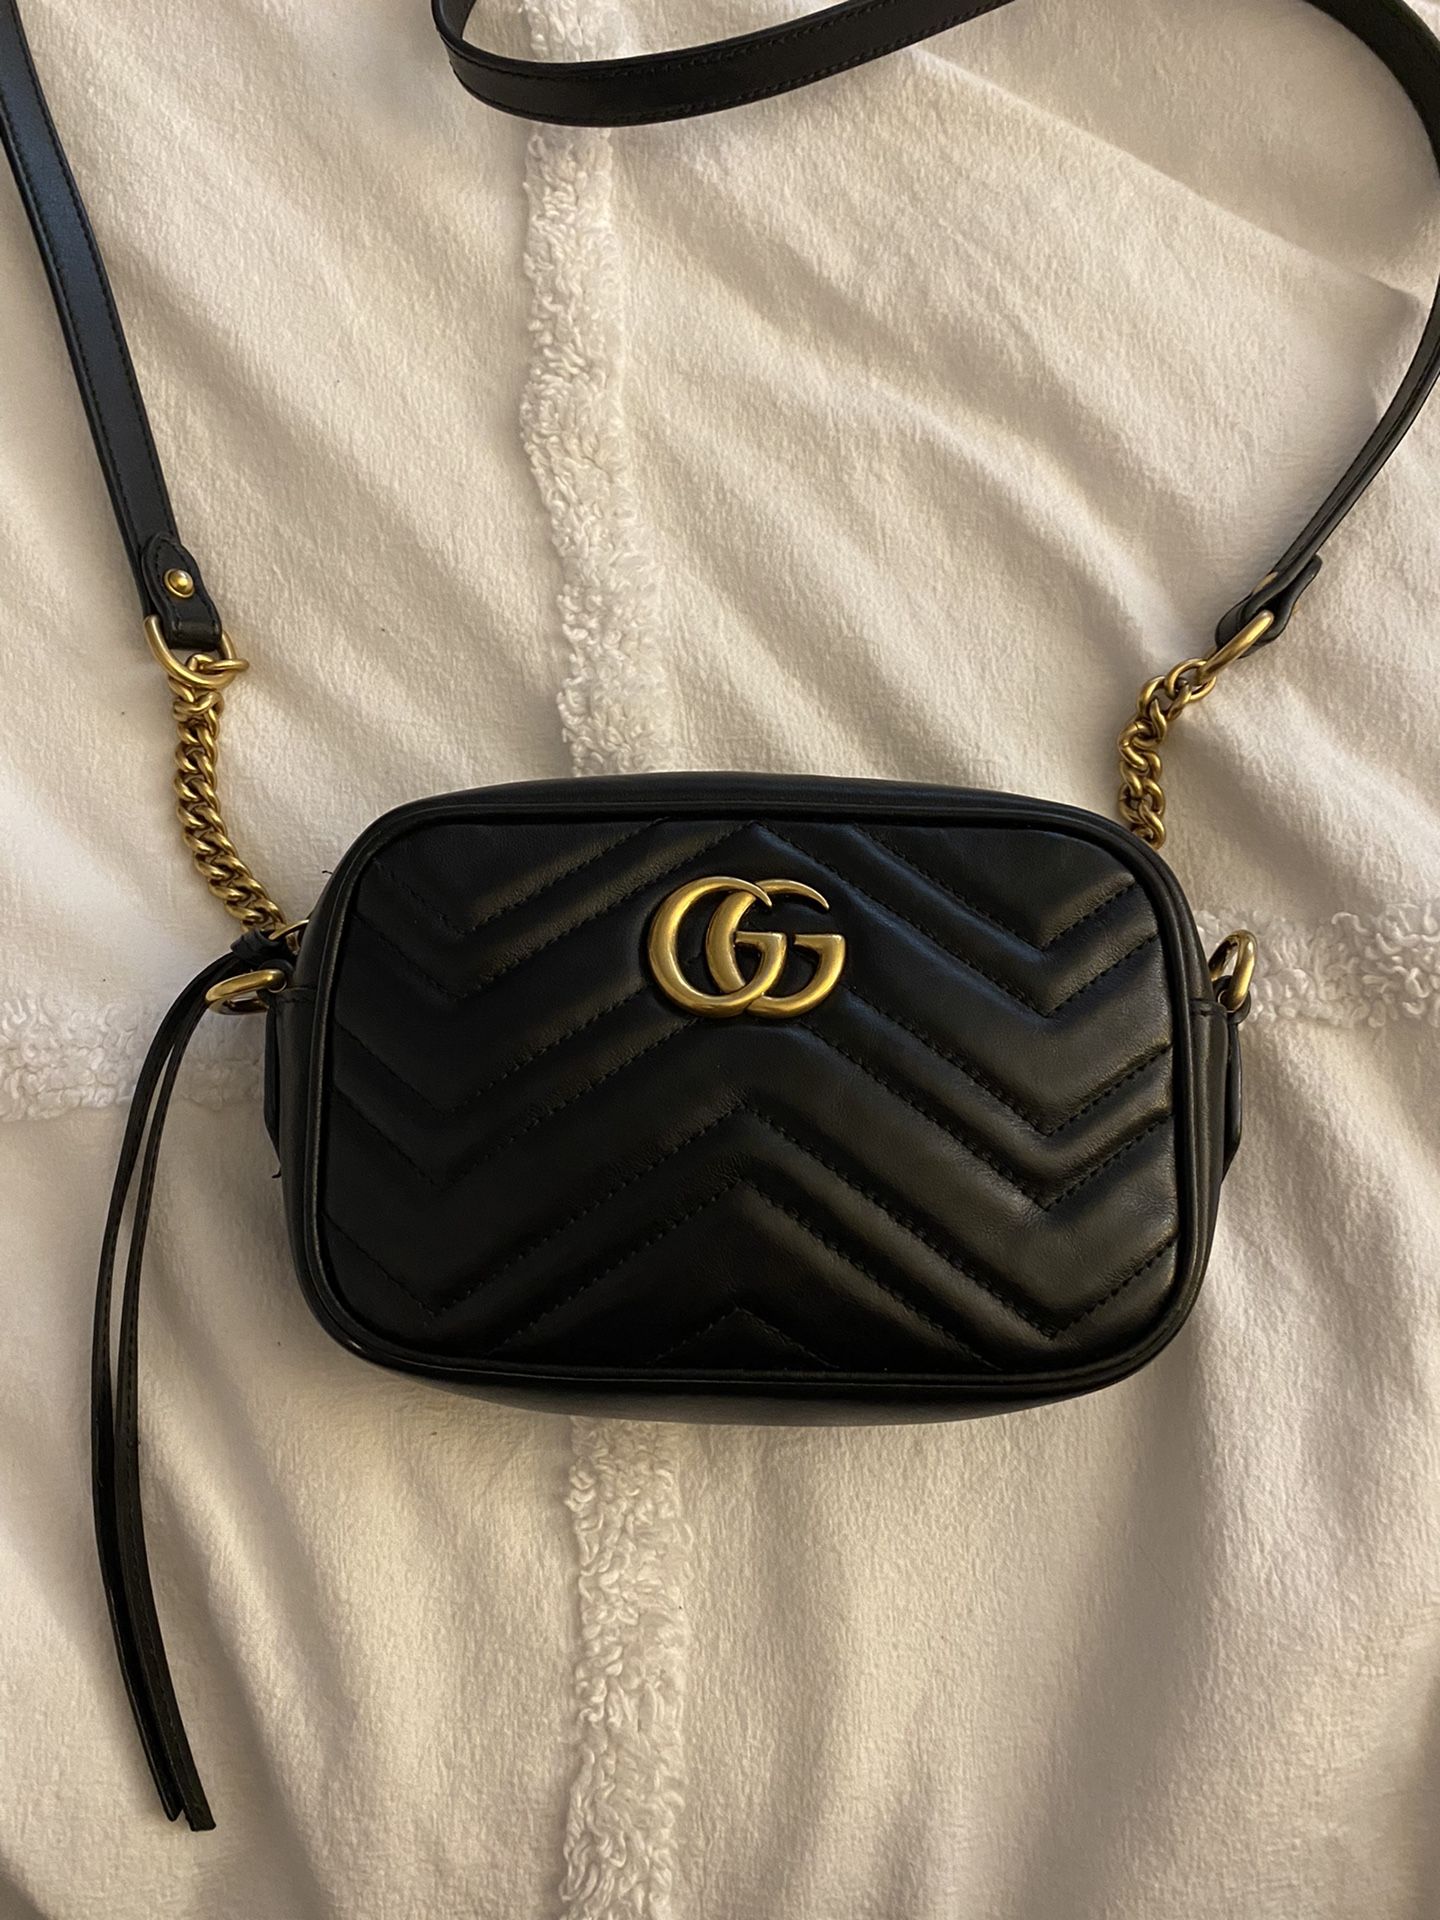 Authentic Gucci Leather Shoulder Bag (MATELASSE)